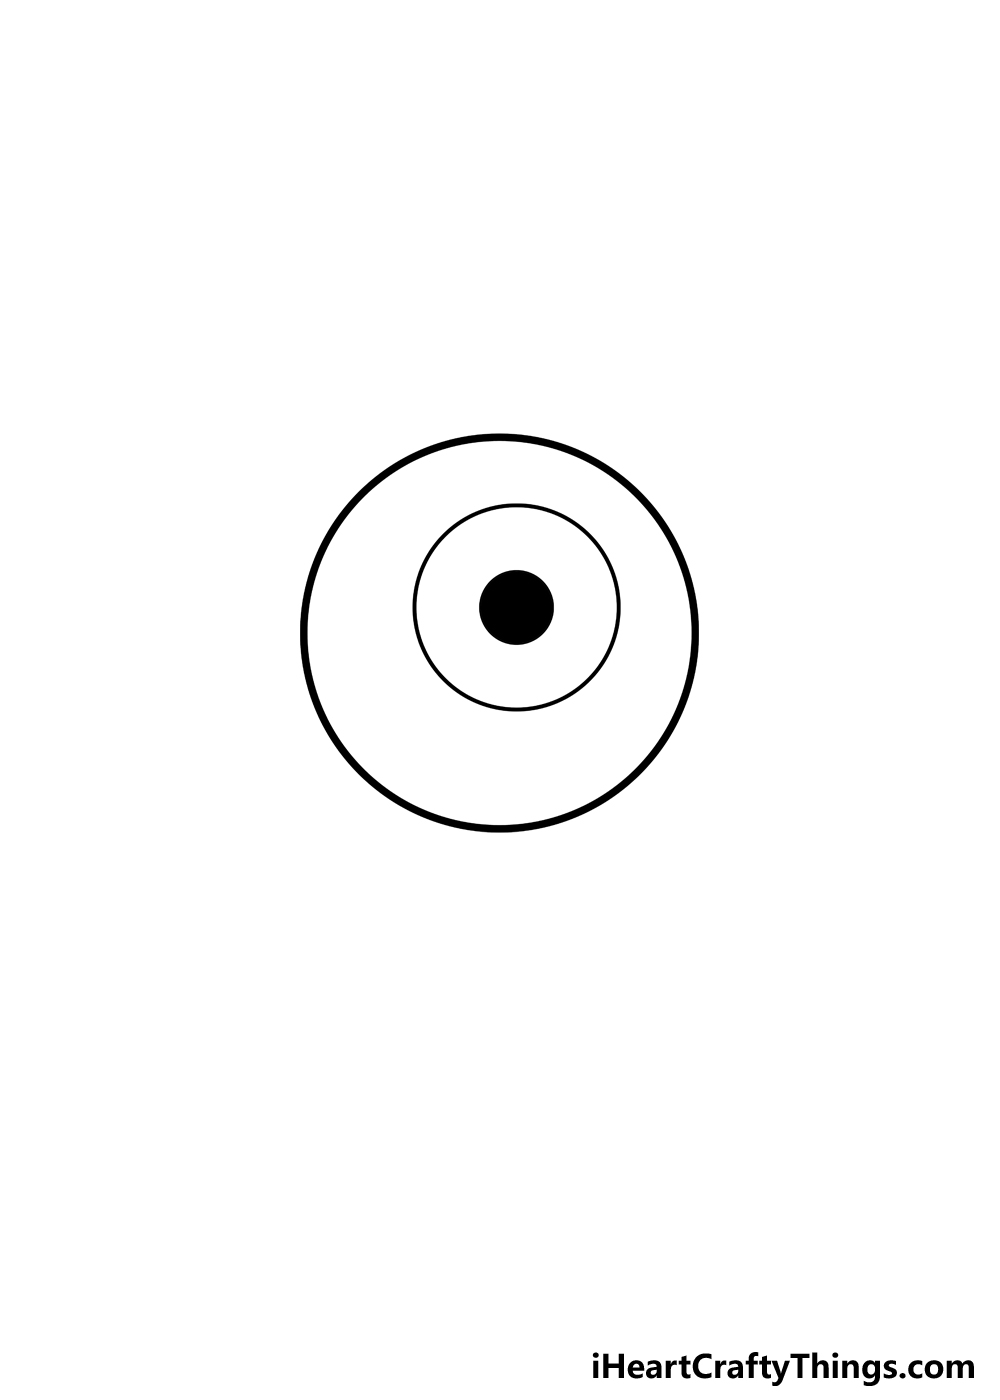 How to Draw An Eyeball step 4